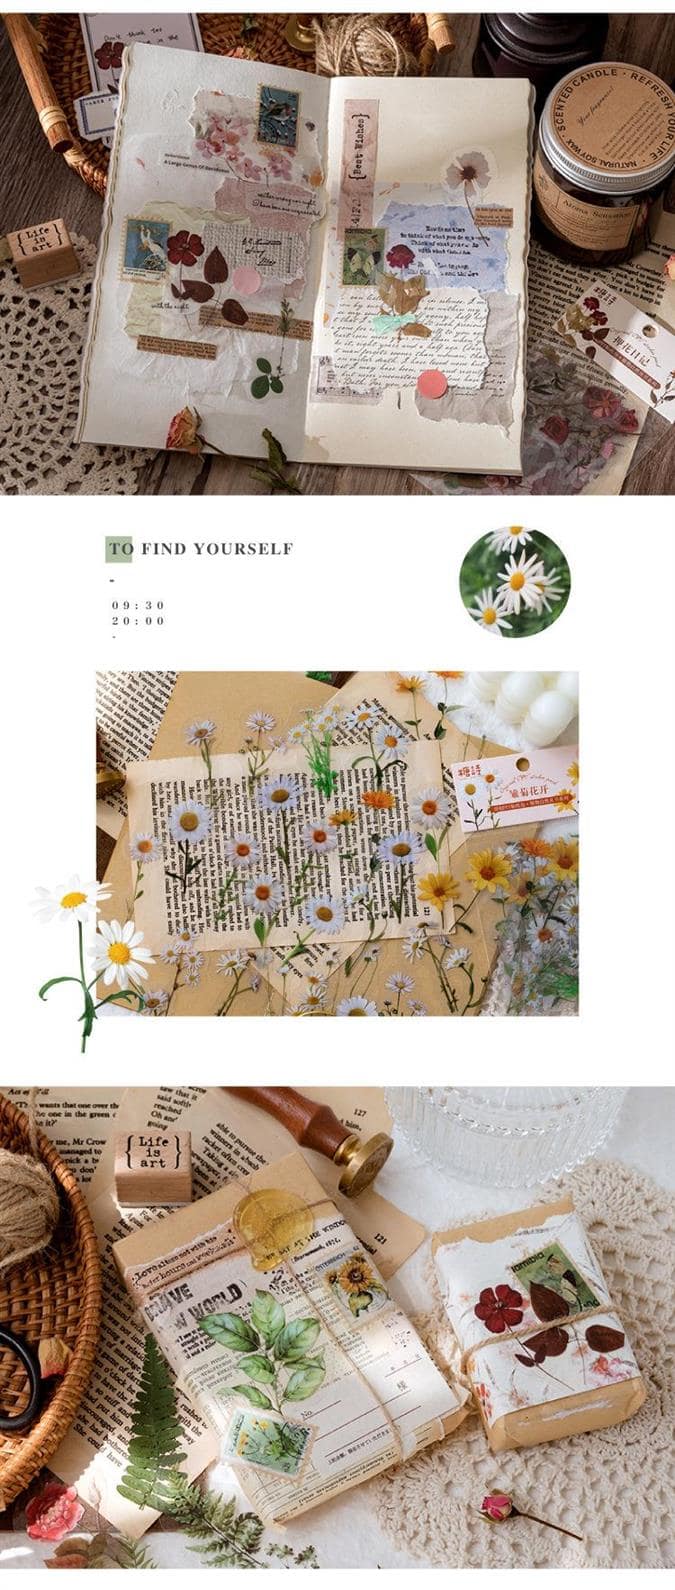 40 pcs/bag Plant Nature Flower Decorative PVC Sticker Scrapbooking diy Label Diary Stationery Album Journal Daisy mushroom Stick